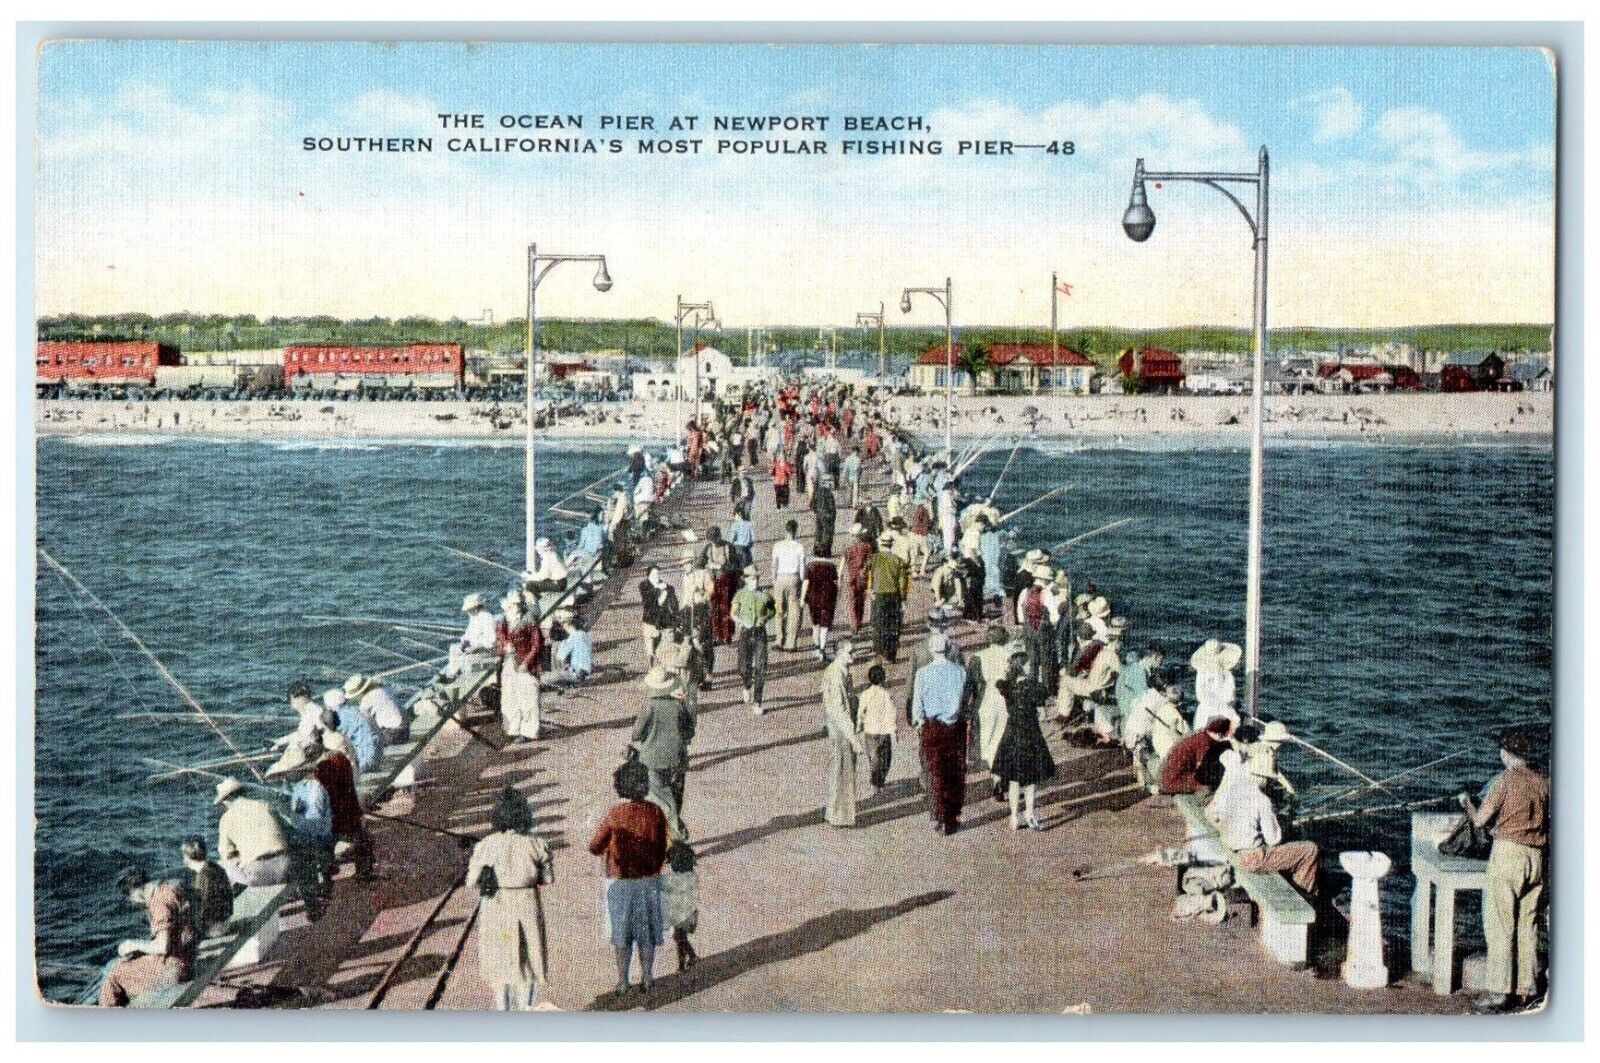 c1940 Ocean Pier Newport Beach Southern California Fishing Pier Vintage Postcard